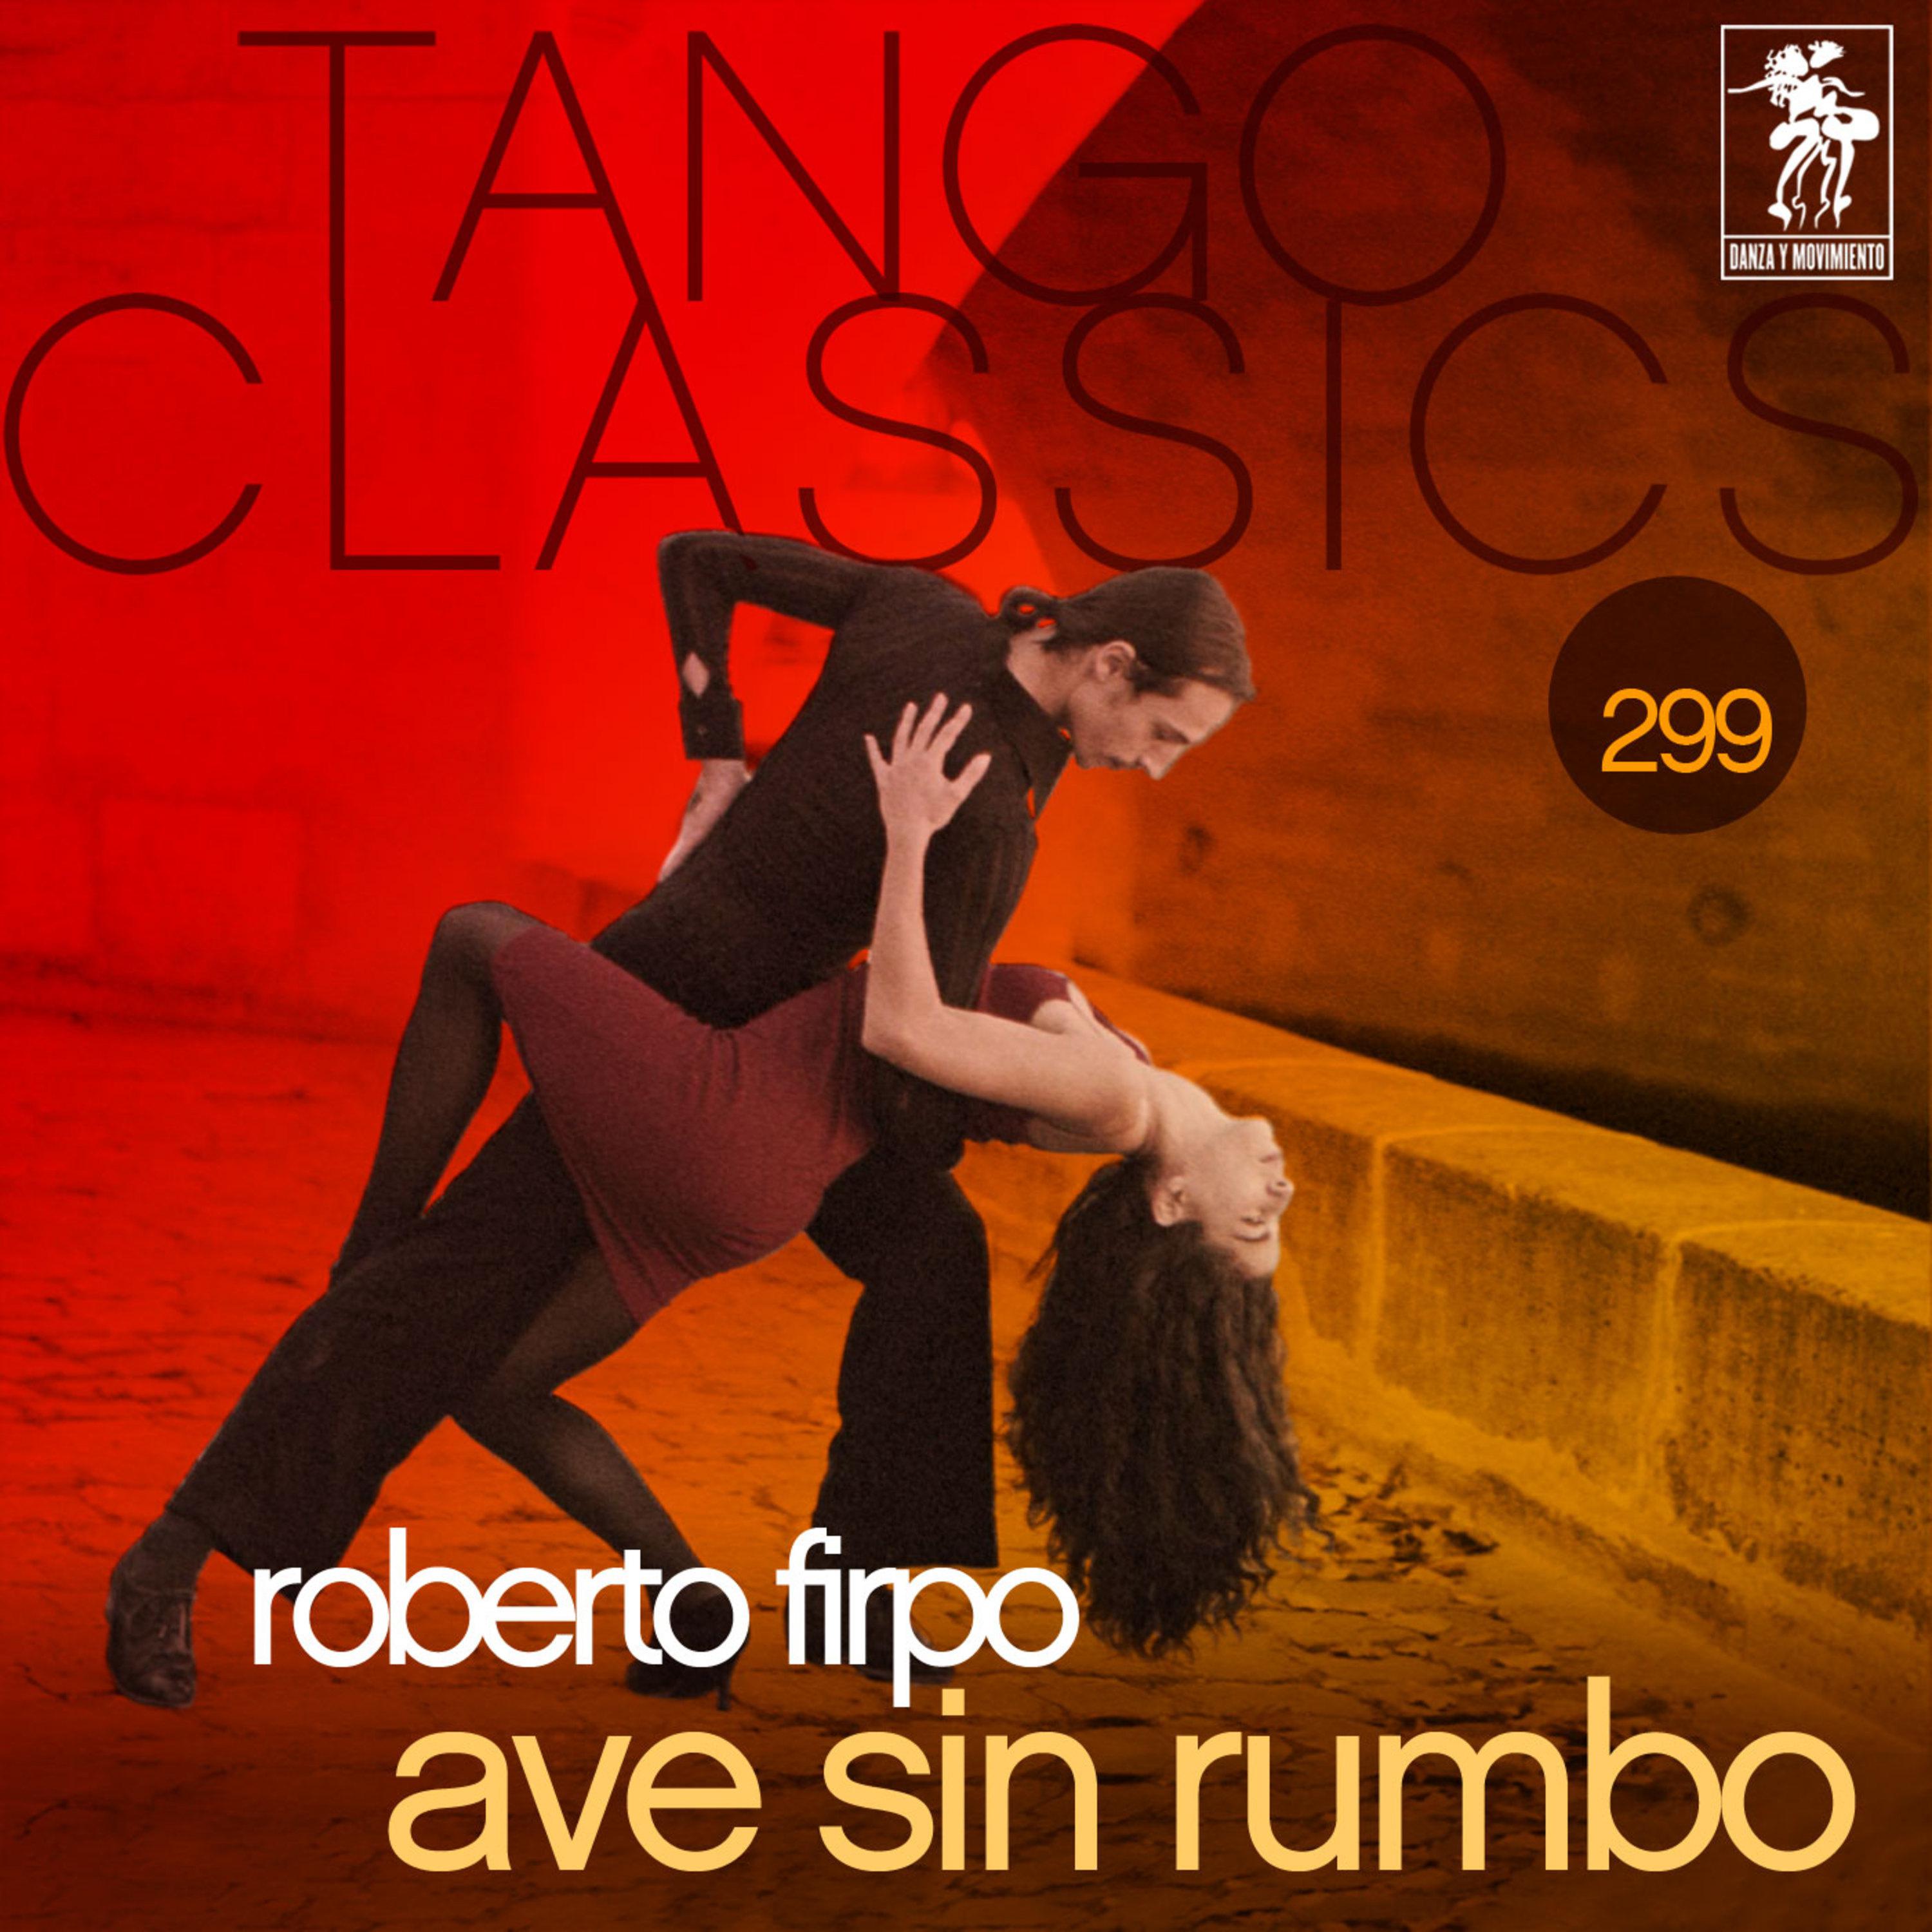 Tango Classics 299: Ave Sin Rumbo